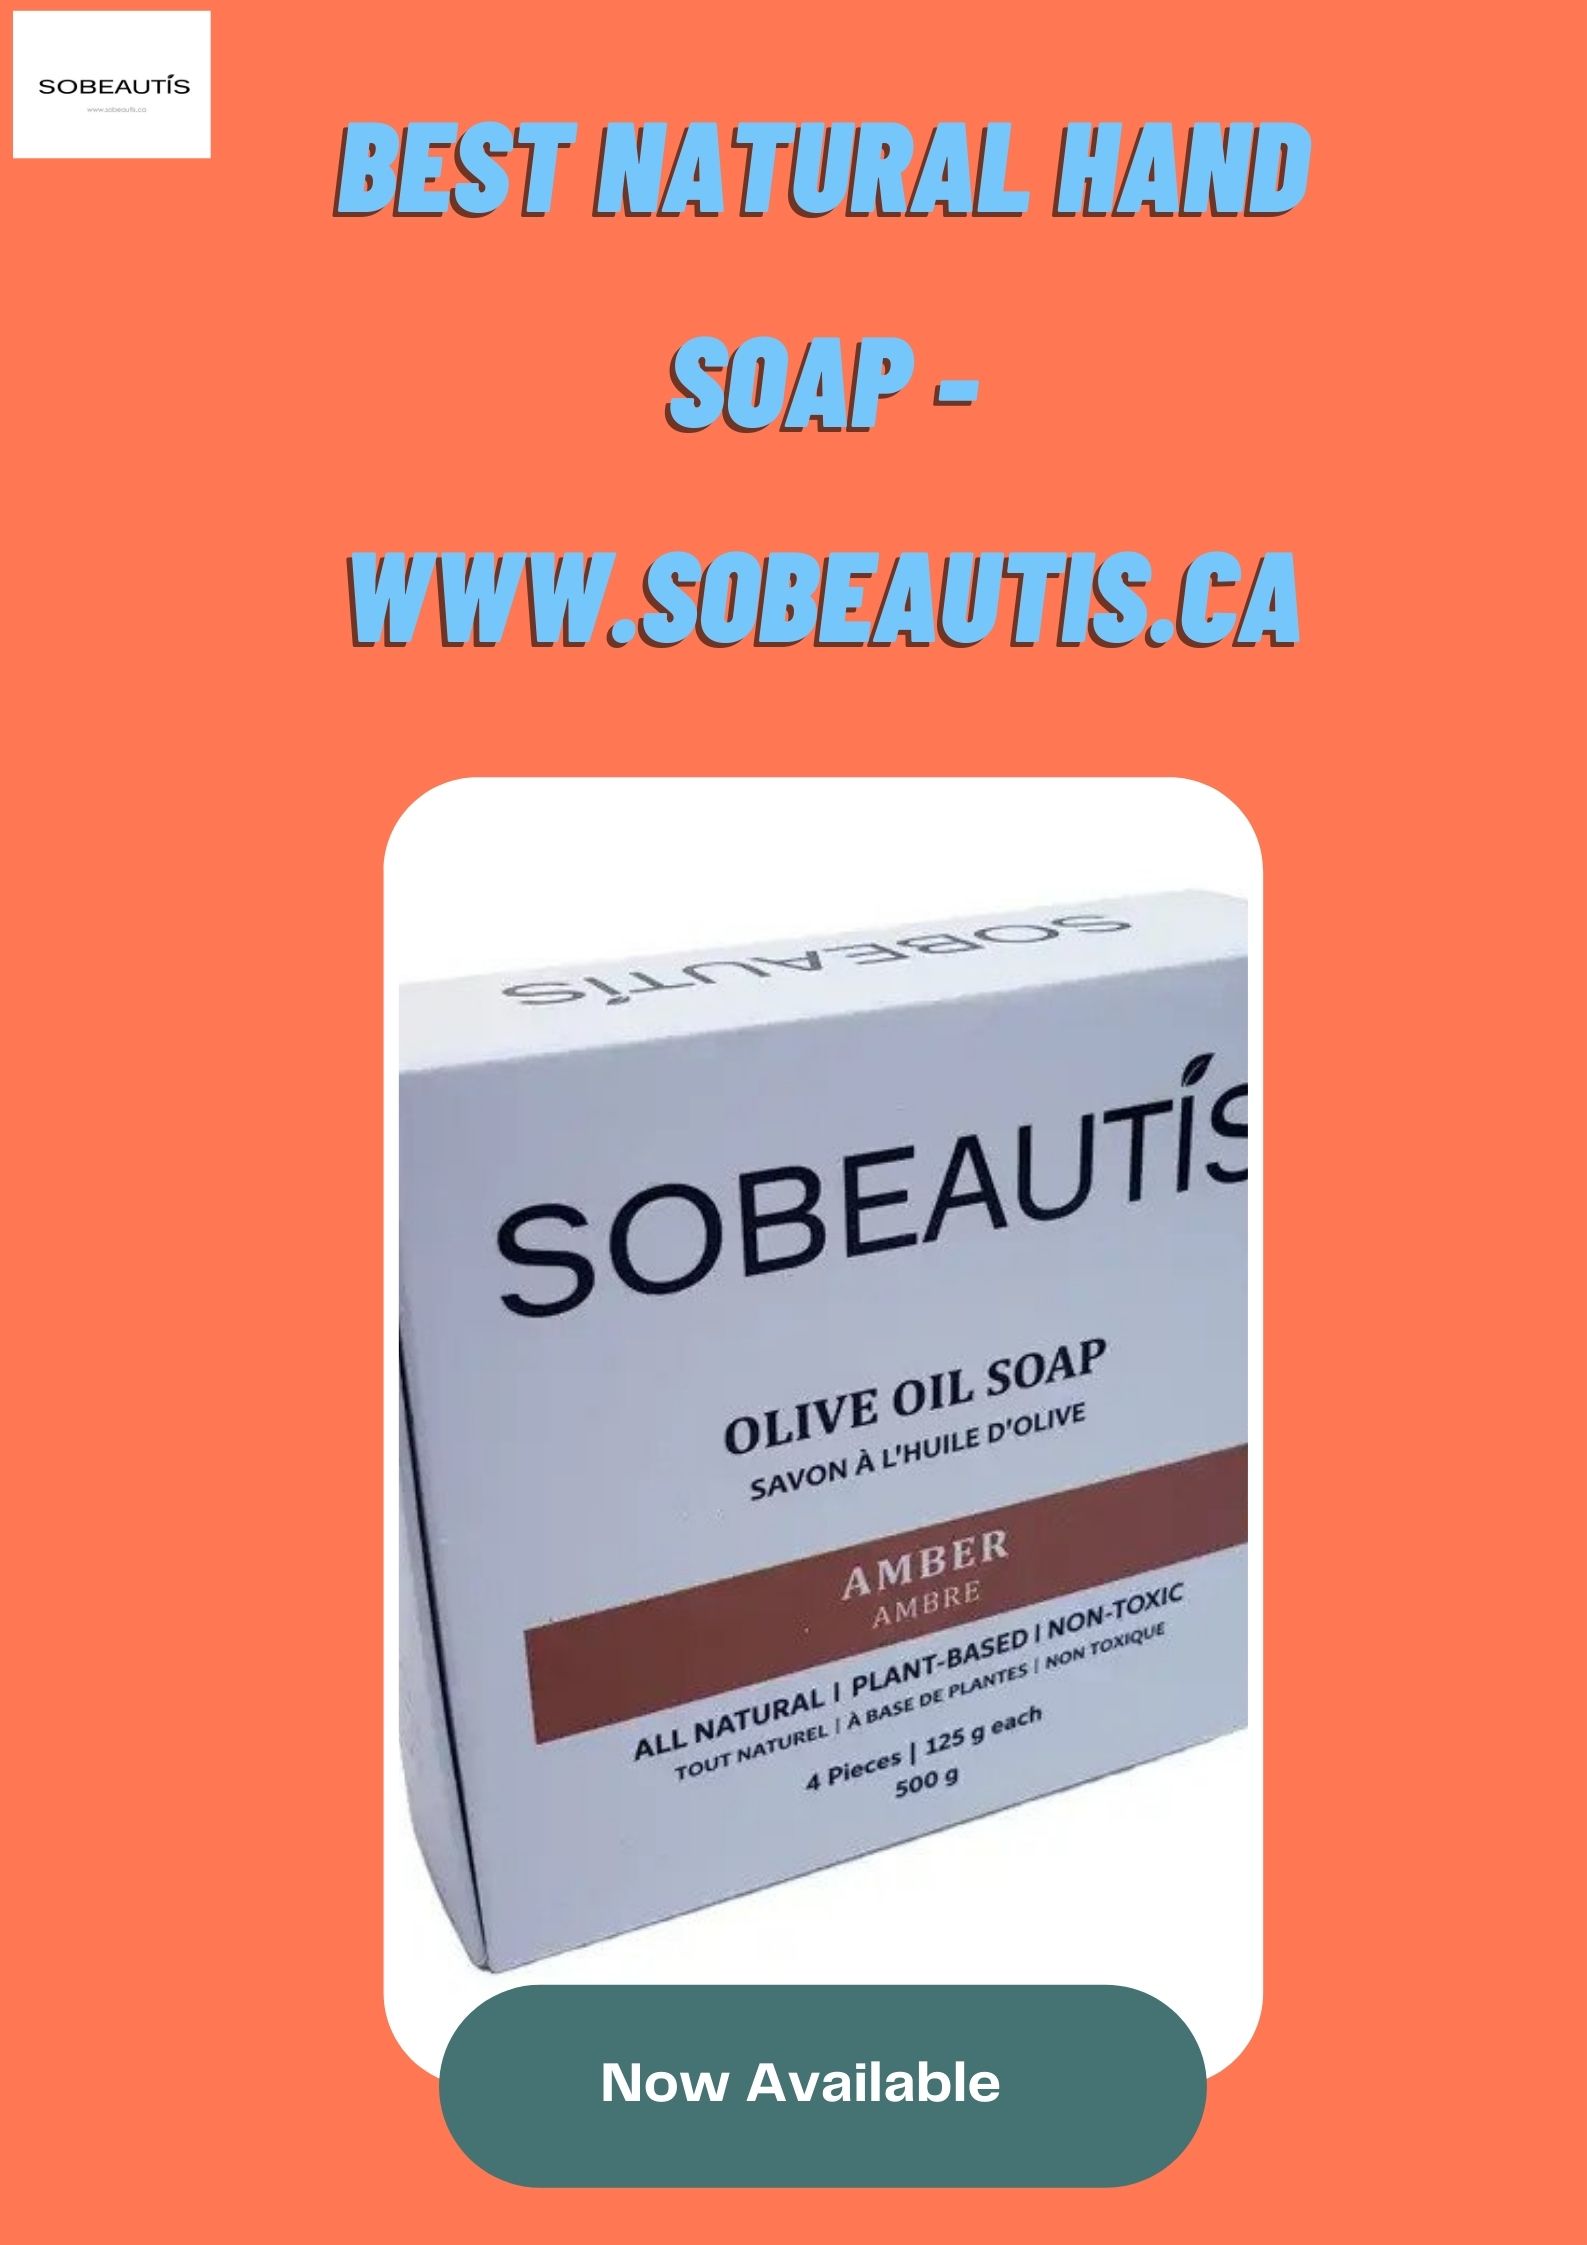 Best Natural Hand Soap - www.Sobeautis.ca